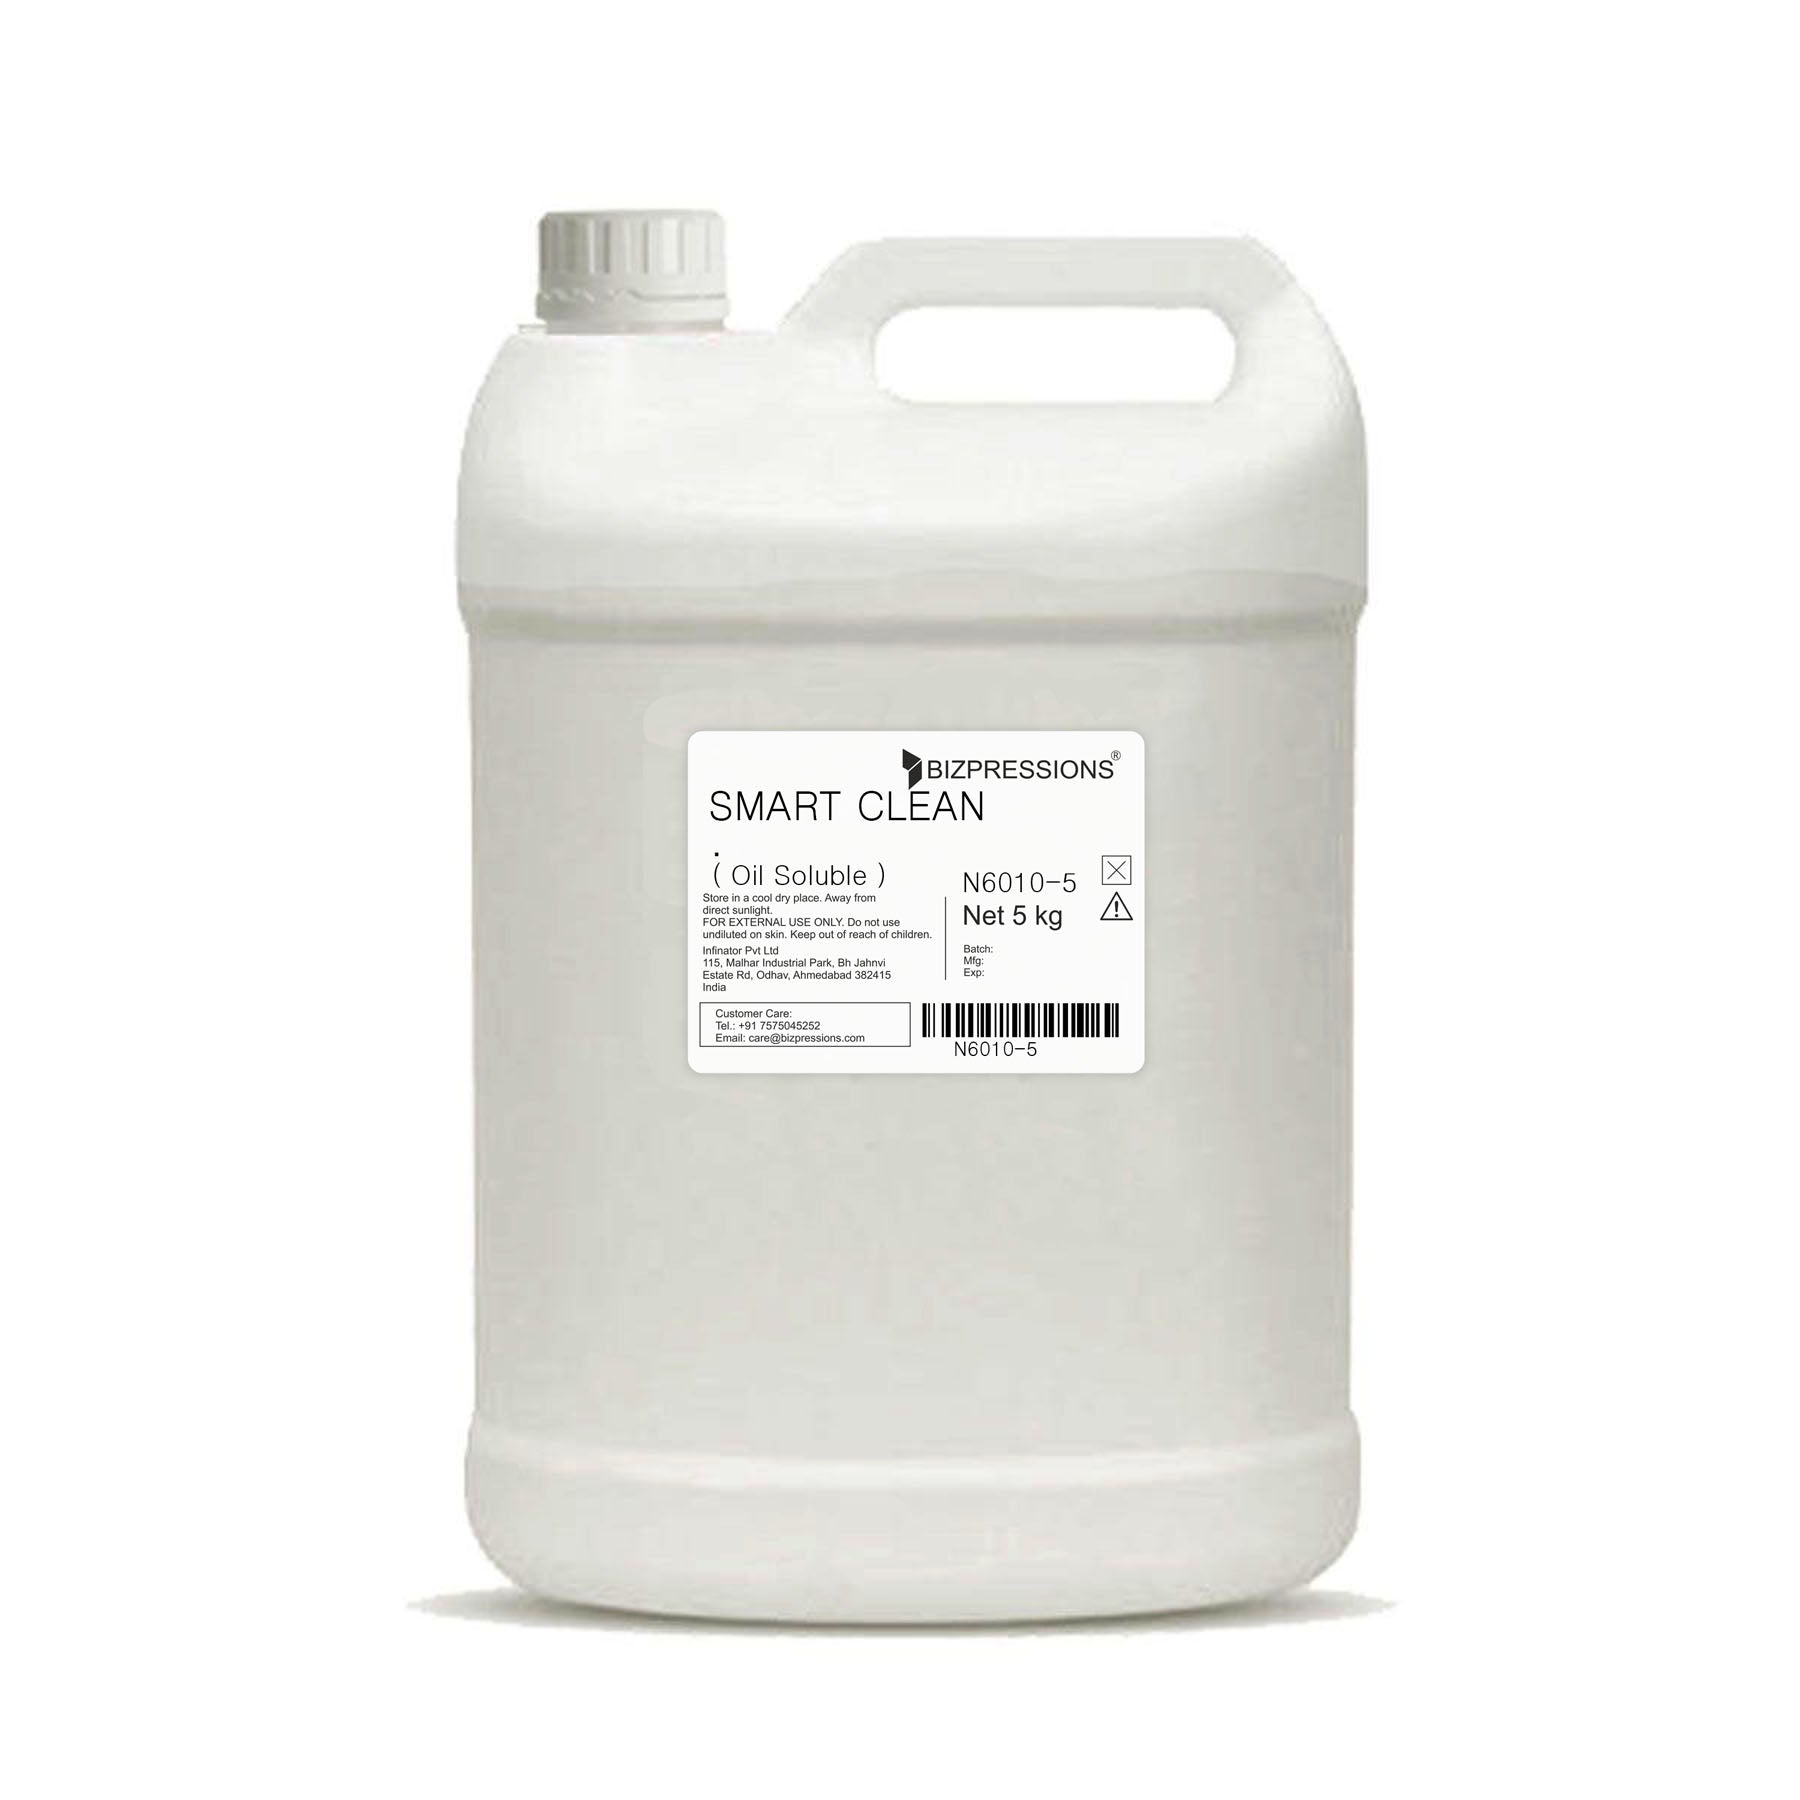 SMART CLEAN - Fragrance ( Oil Soluble ) - 5 kg